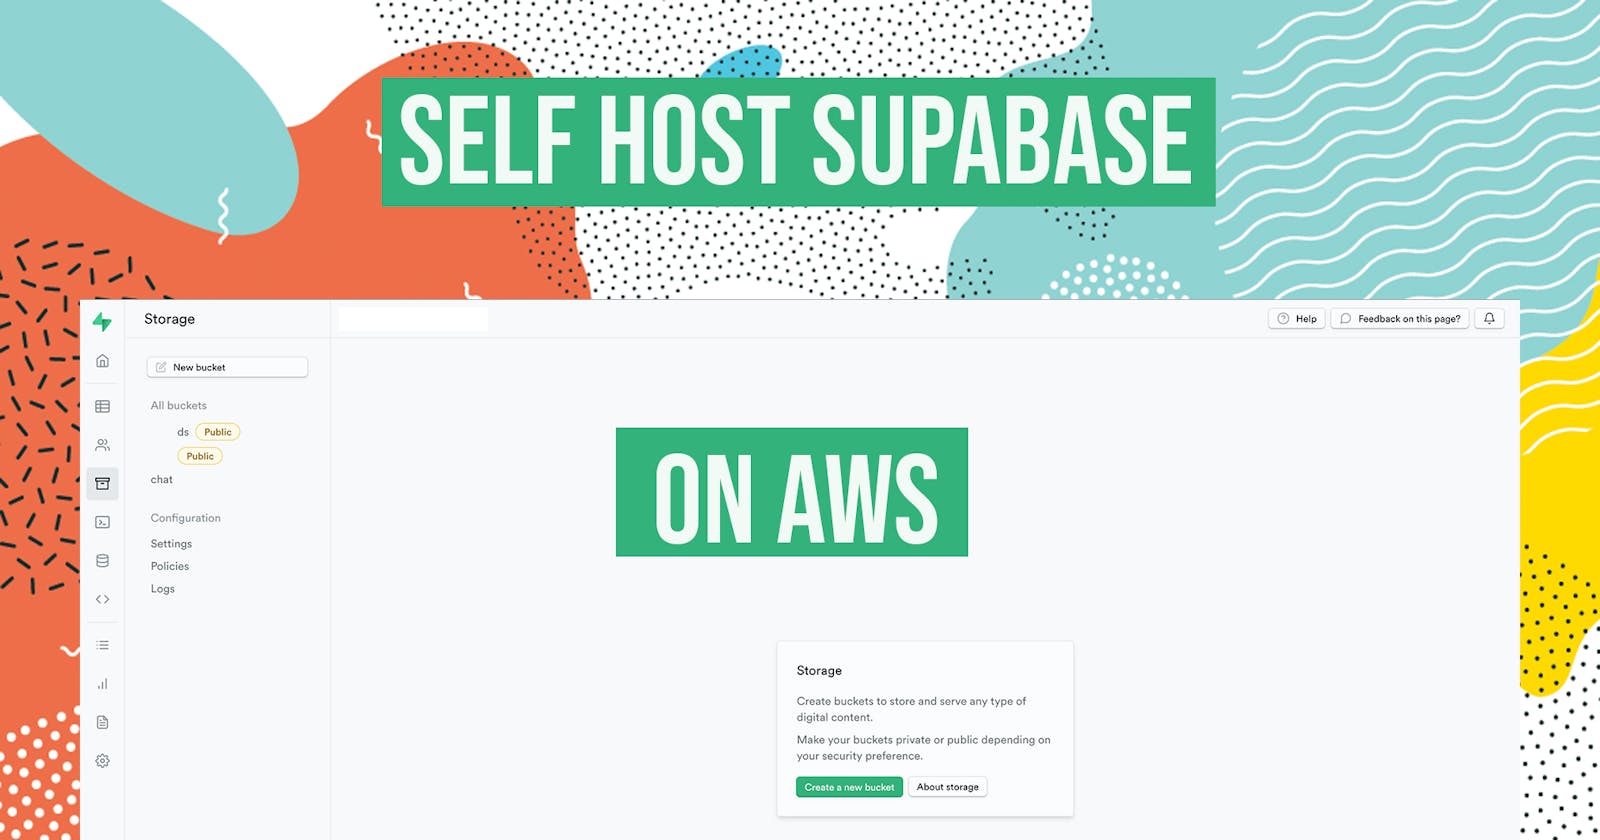 Self hosting Supabase on AWS